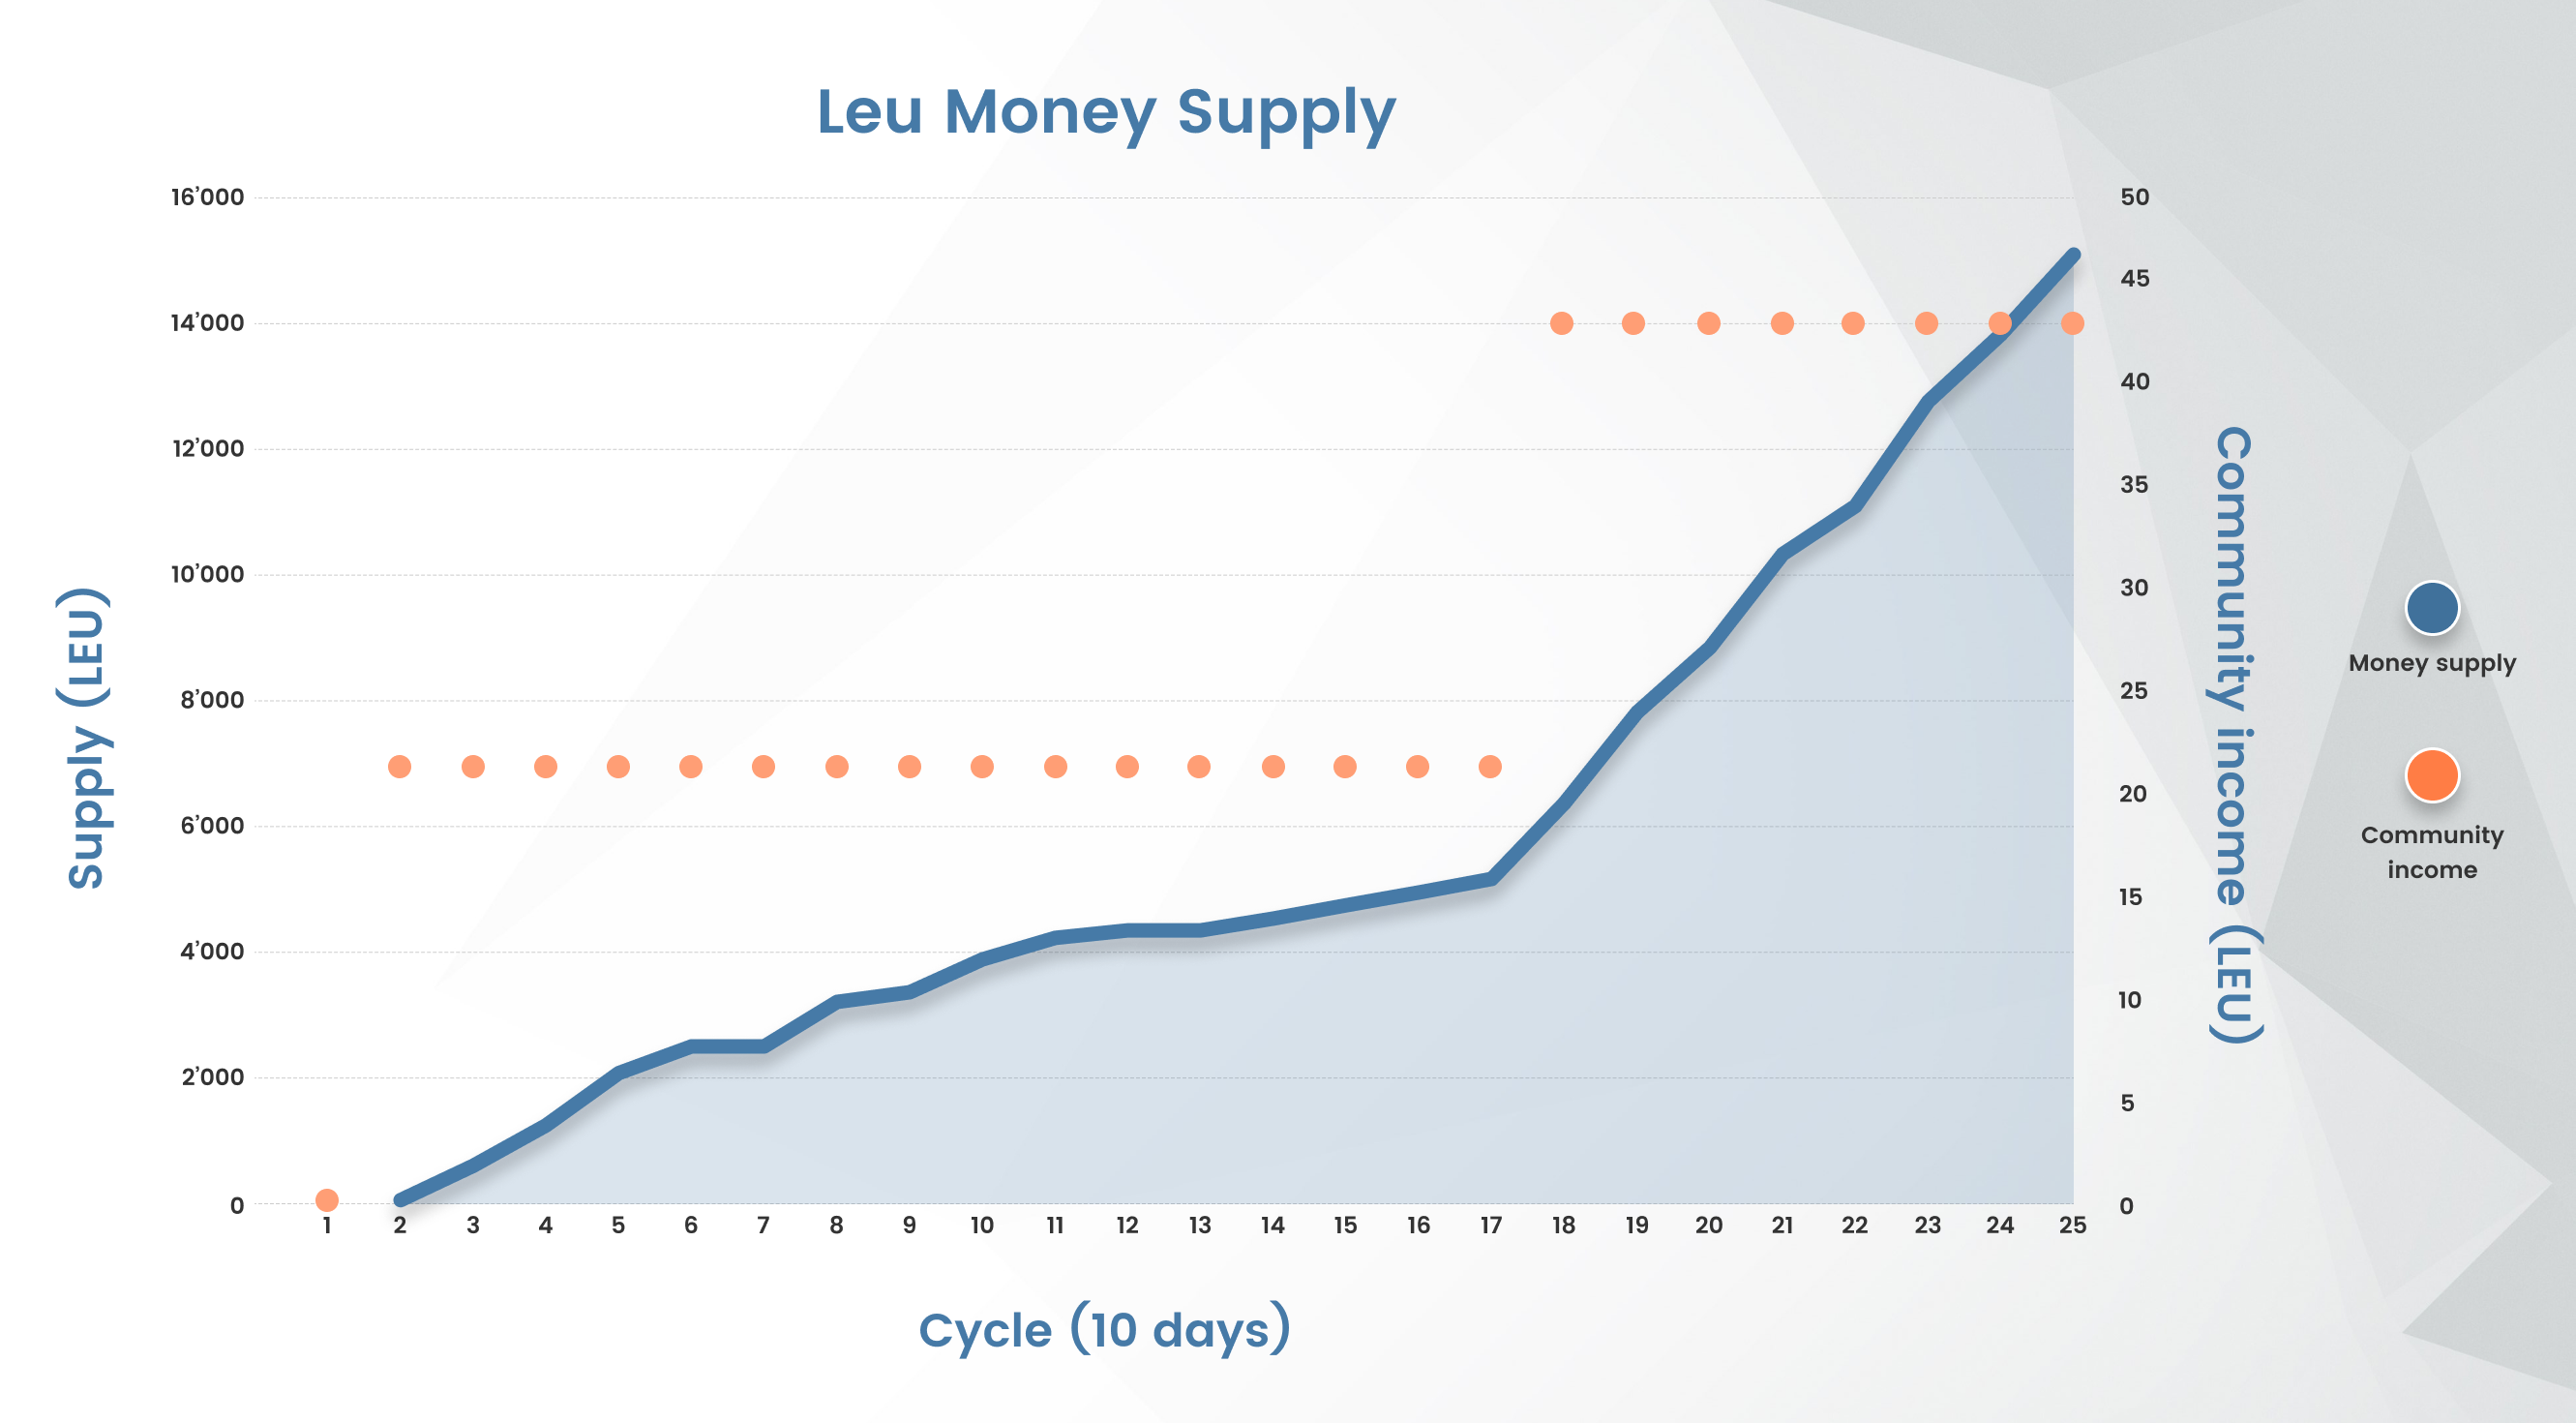 Figure 4: Leu money supply
